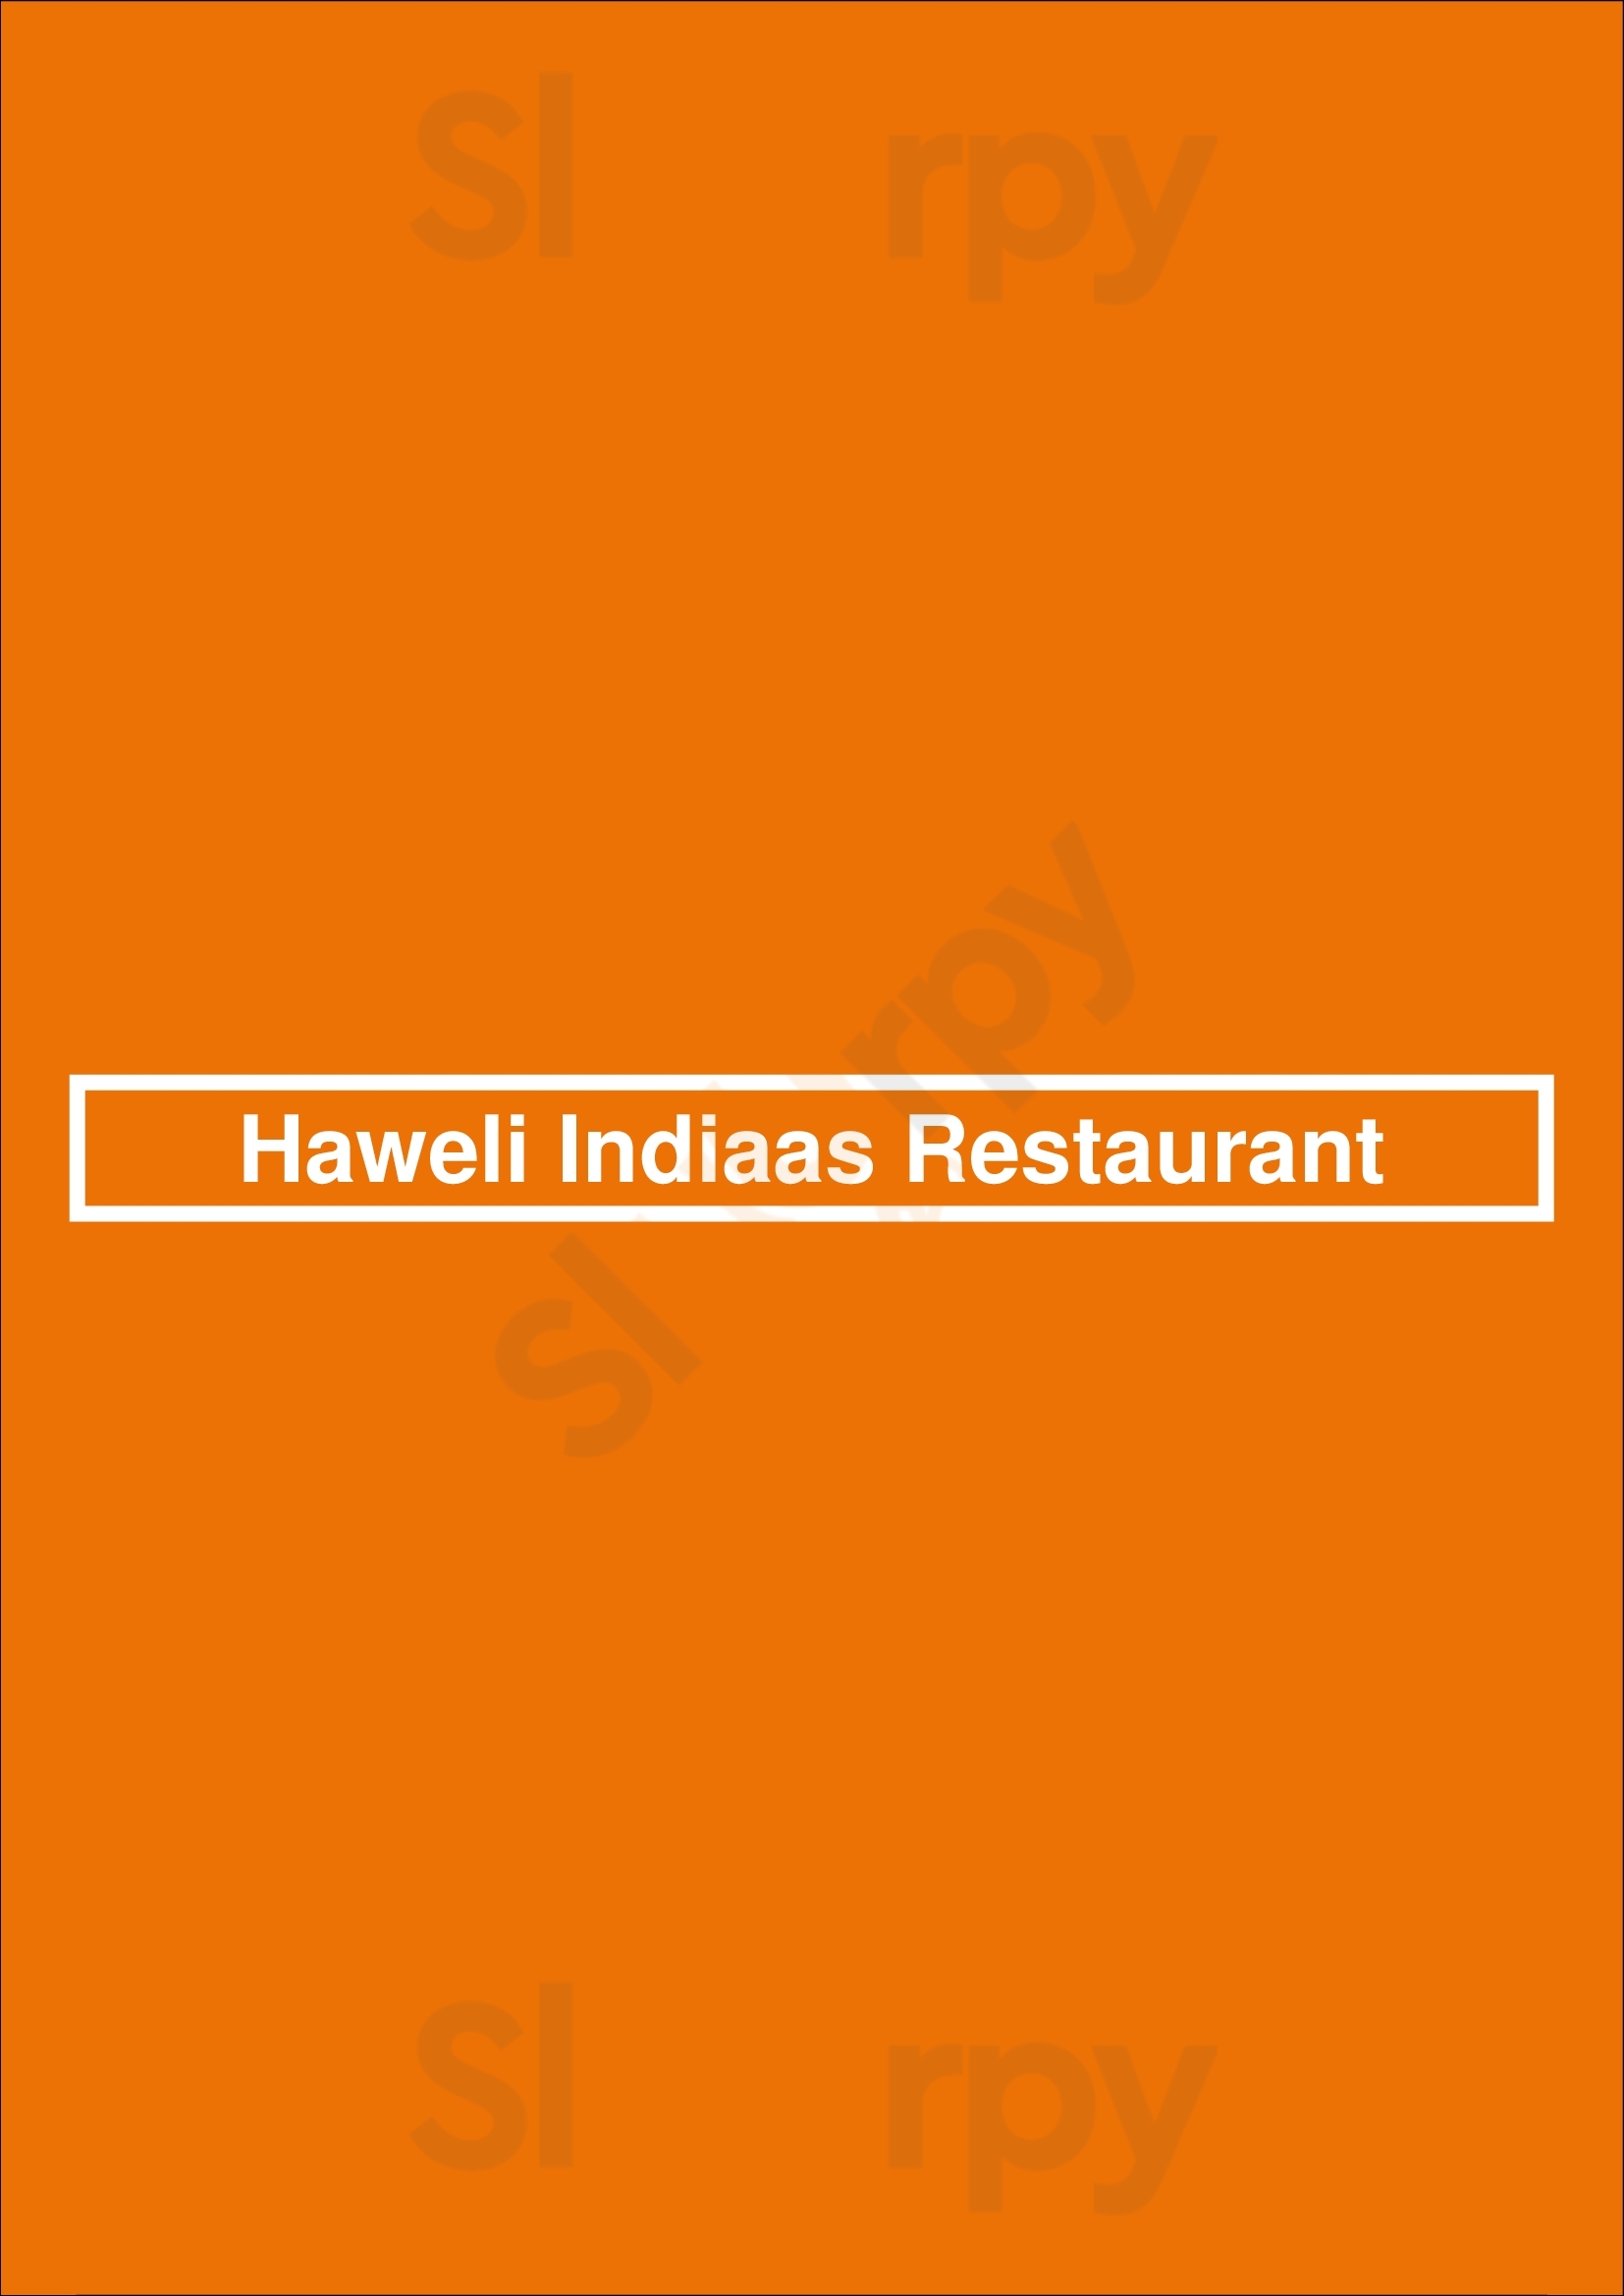 Haweli Indiaas Restaurant Amsterdam Menu - 1